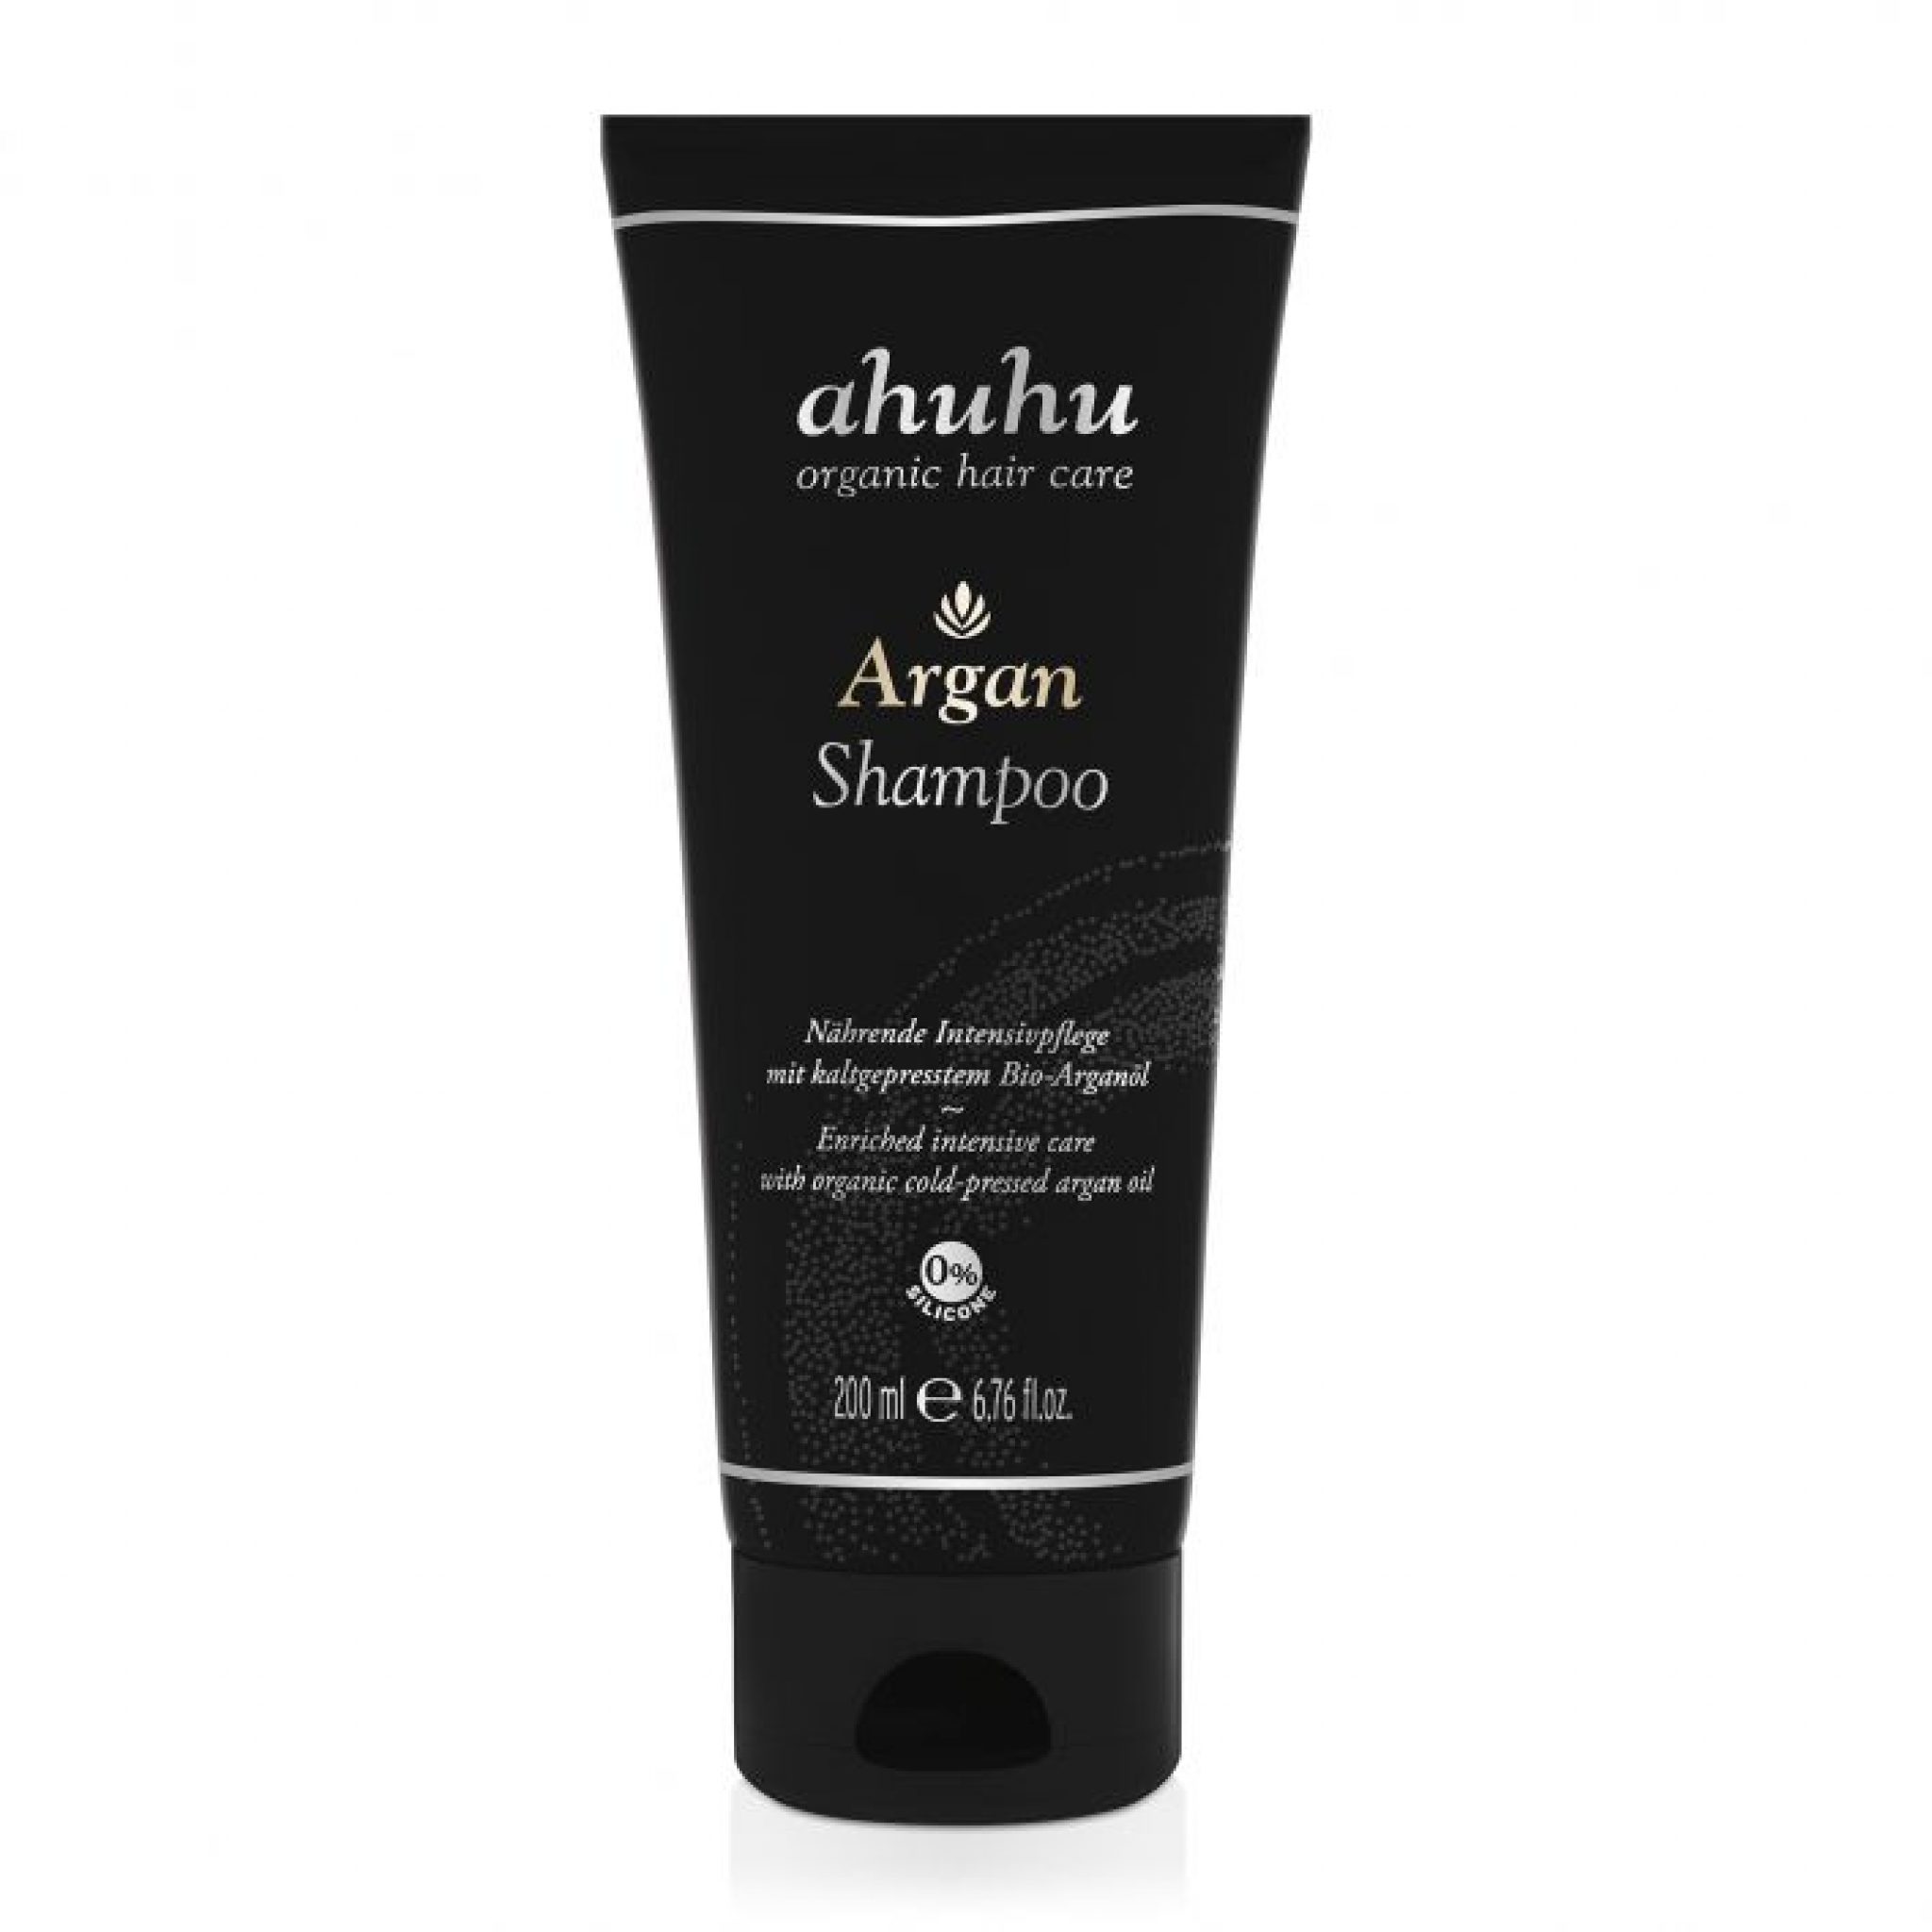 review AHUHU ARGAN Shampoo-min